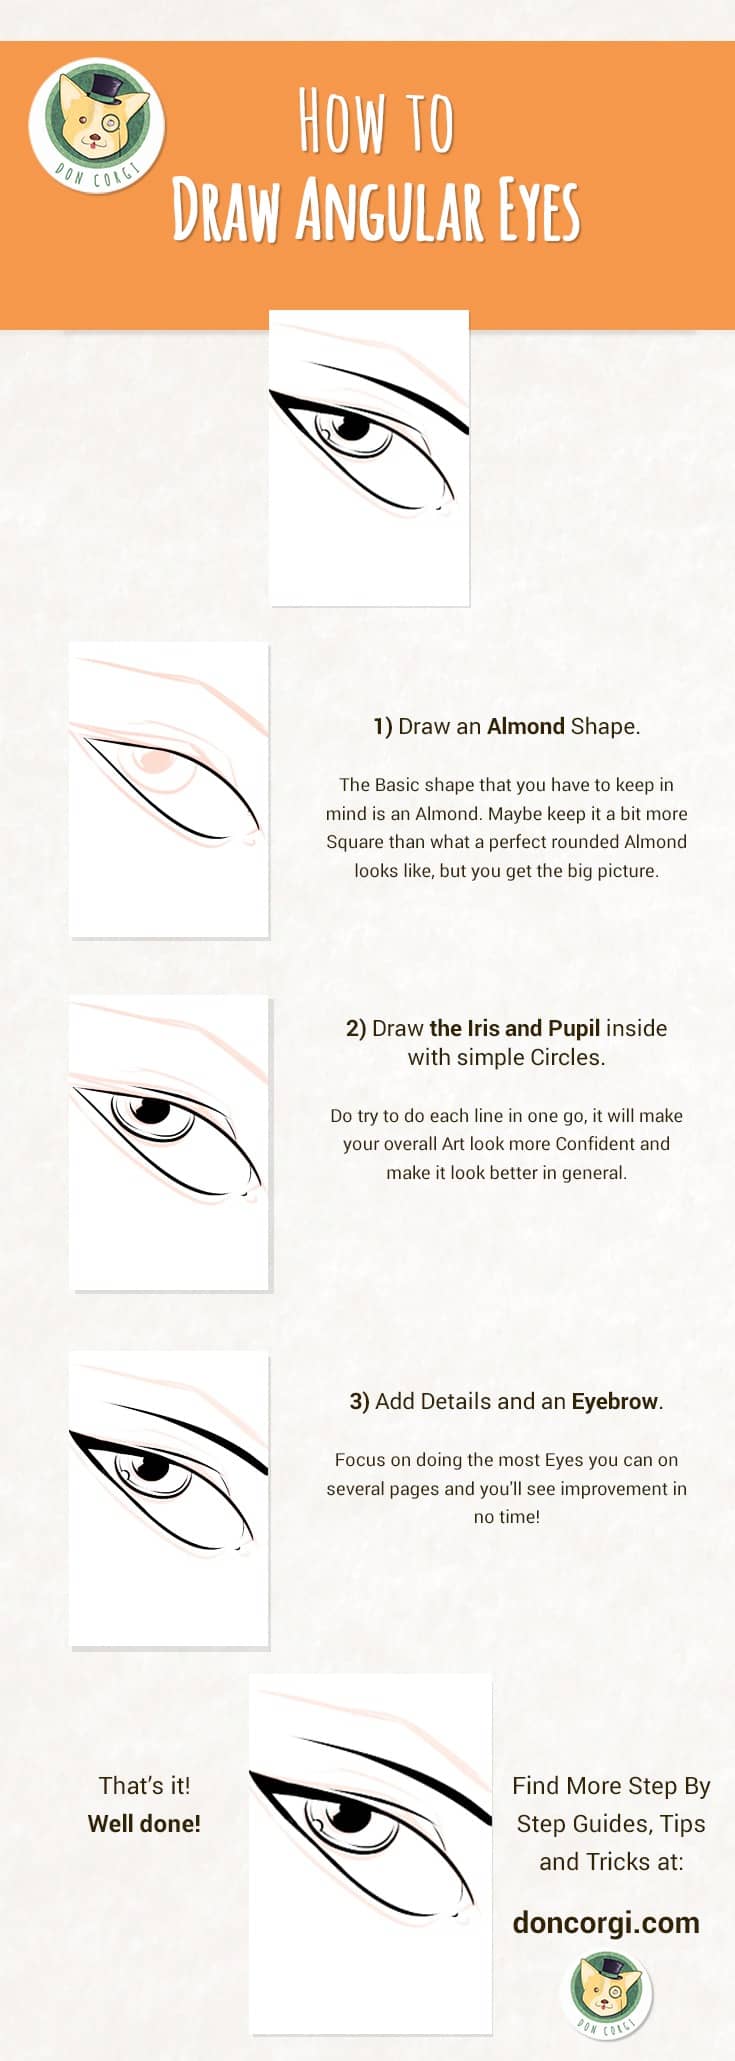 09 - How to Draw Eyes - Drawing Angular Eyes by Don Corgi